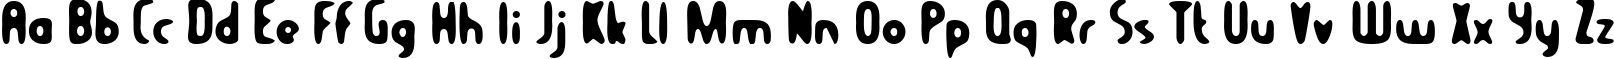 Пример написания английского алфавита шрифтом Balcony Angels